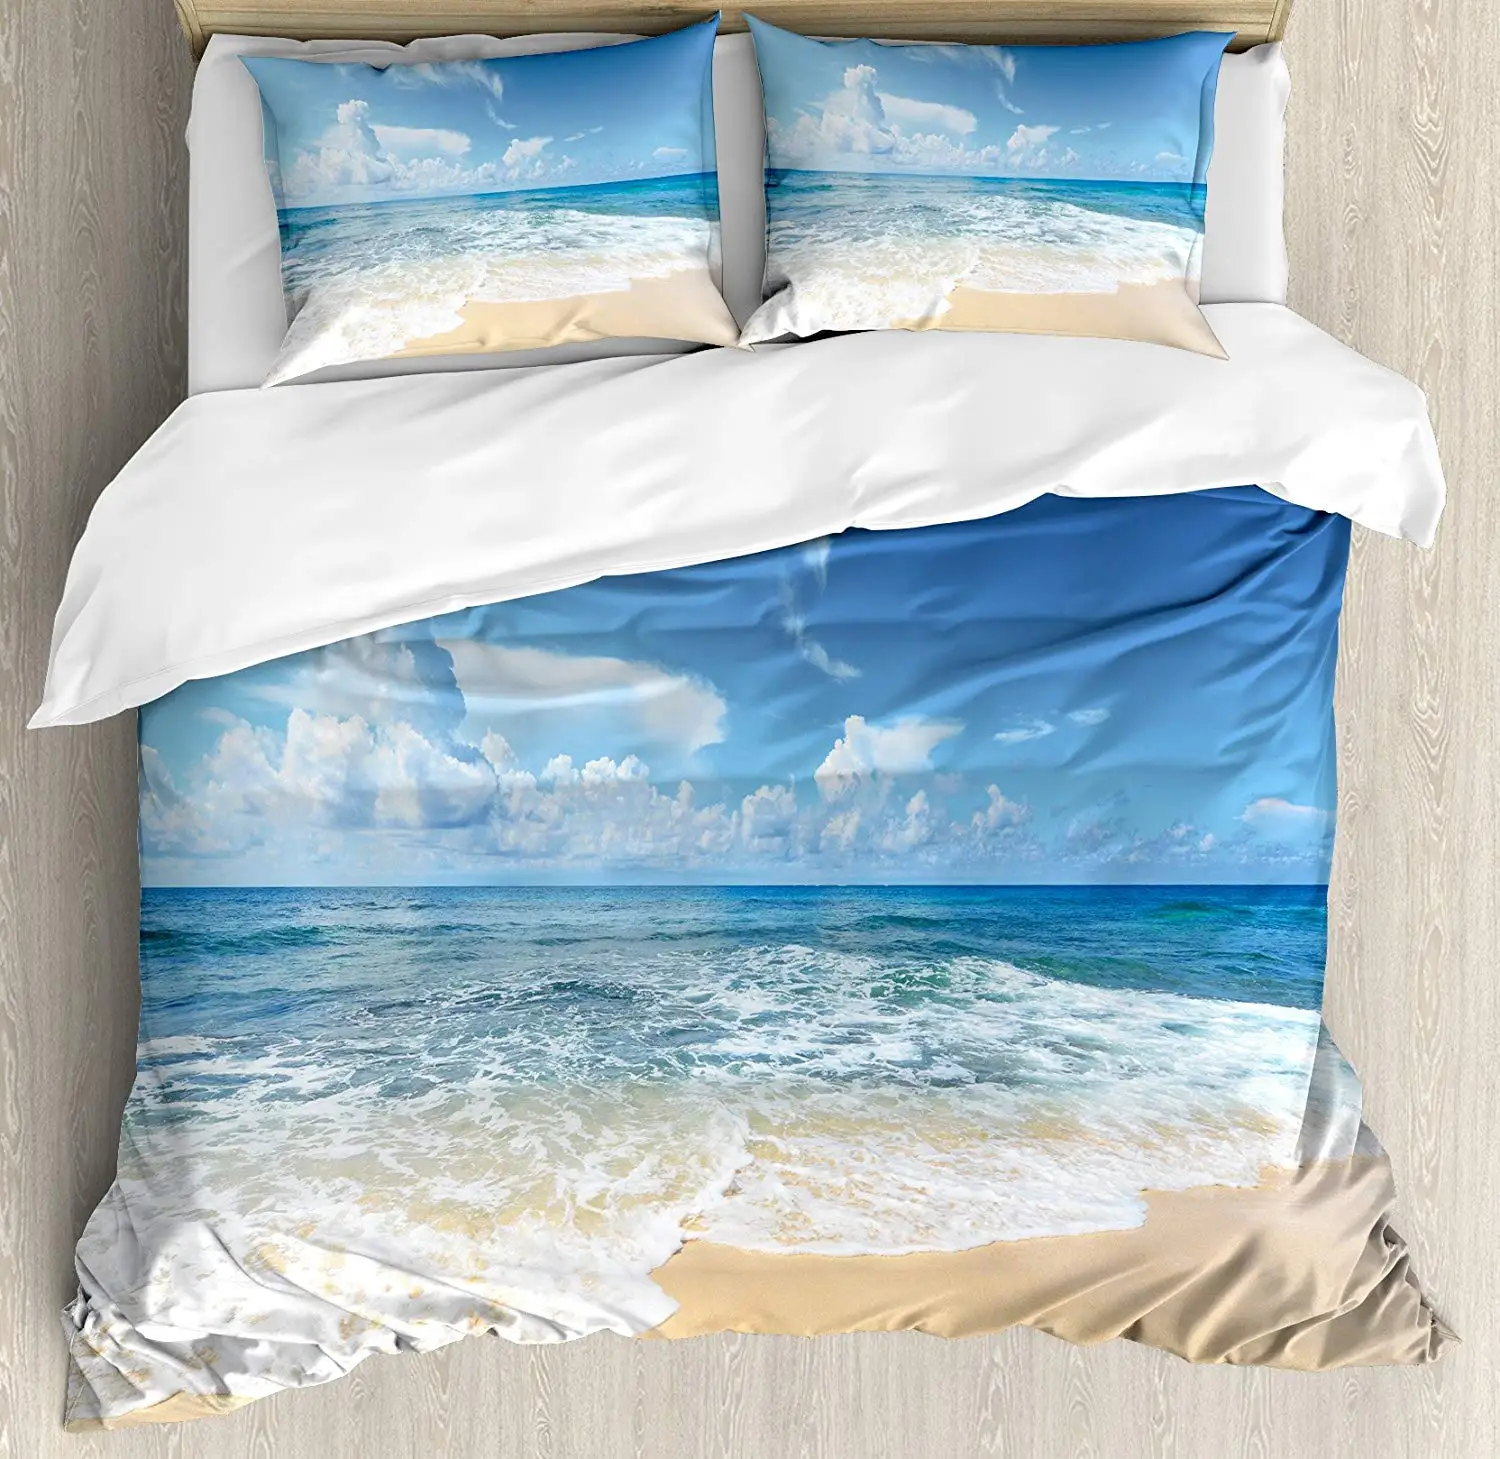 

Ocean Duvet Cover Set Queen Size Waves and Paradise Beach Sky Sun Endless Summer Sea Coast View Tropic Print 4 Piece Bedding Set